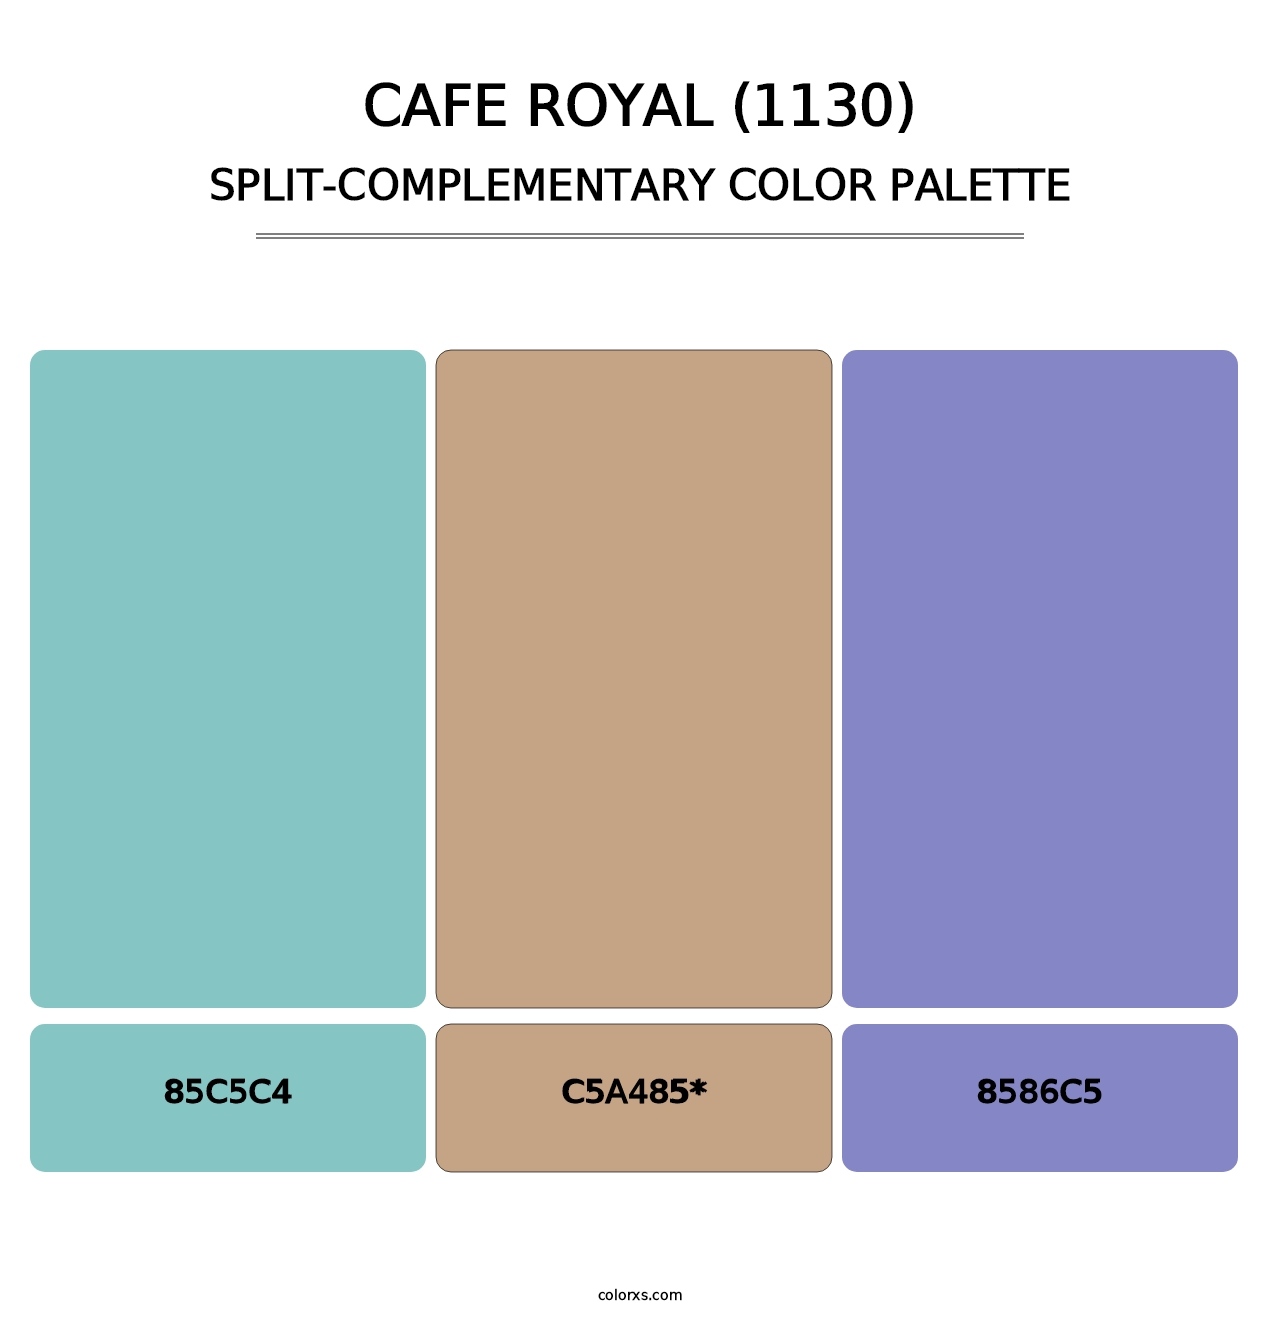 Cafe Royal (1130) - Split-Complementary Color Palette